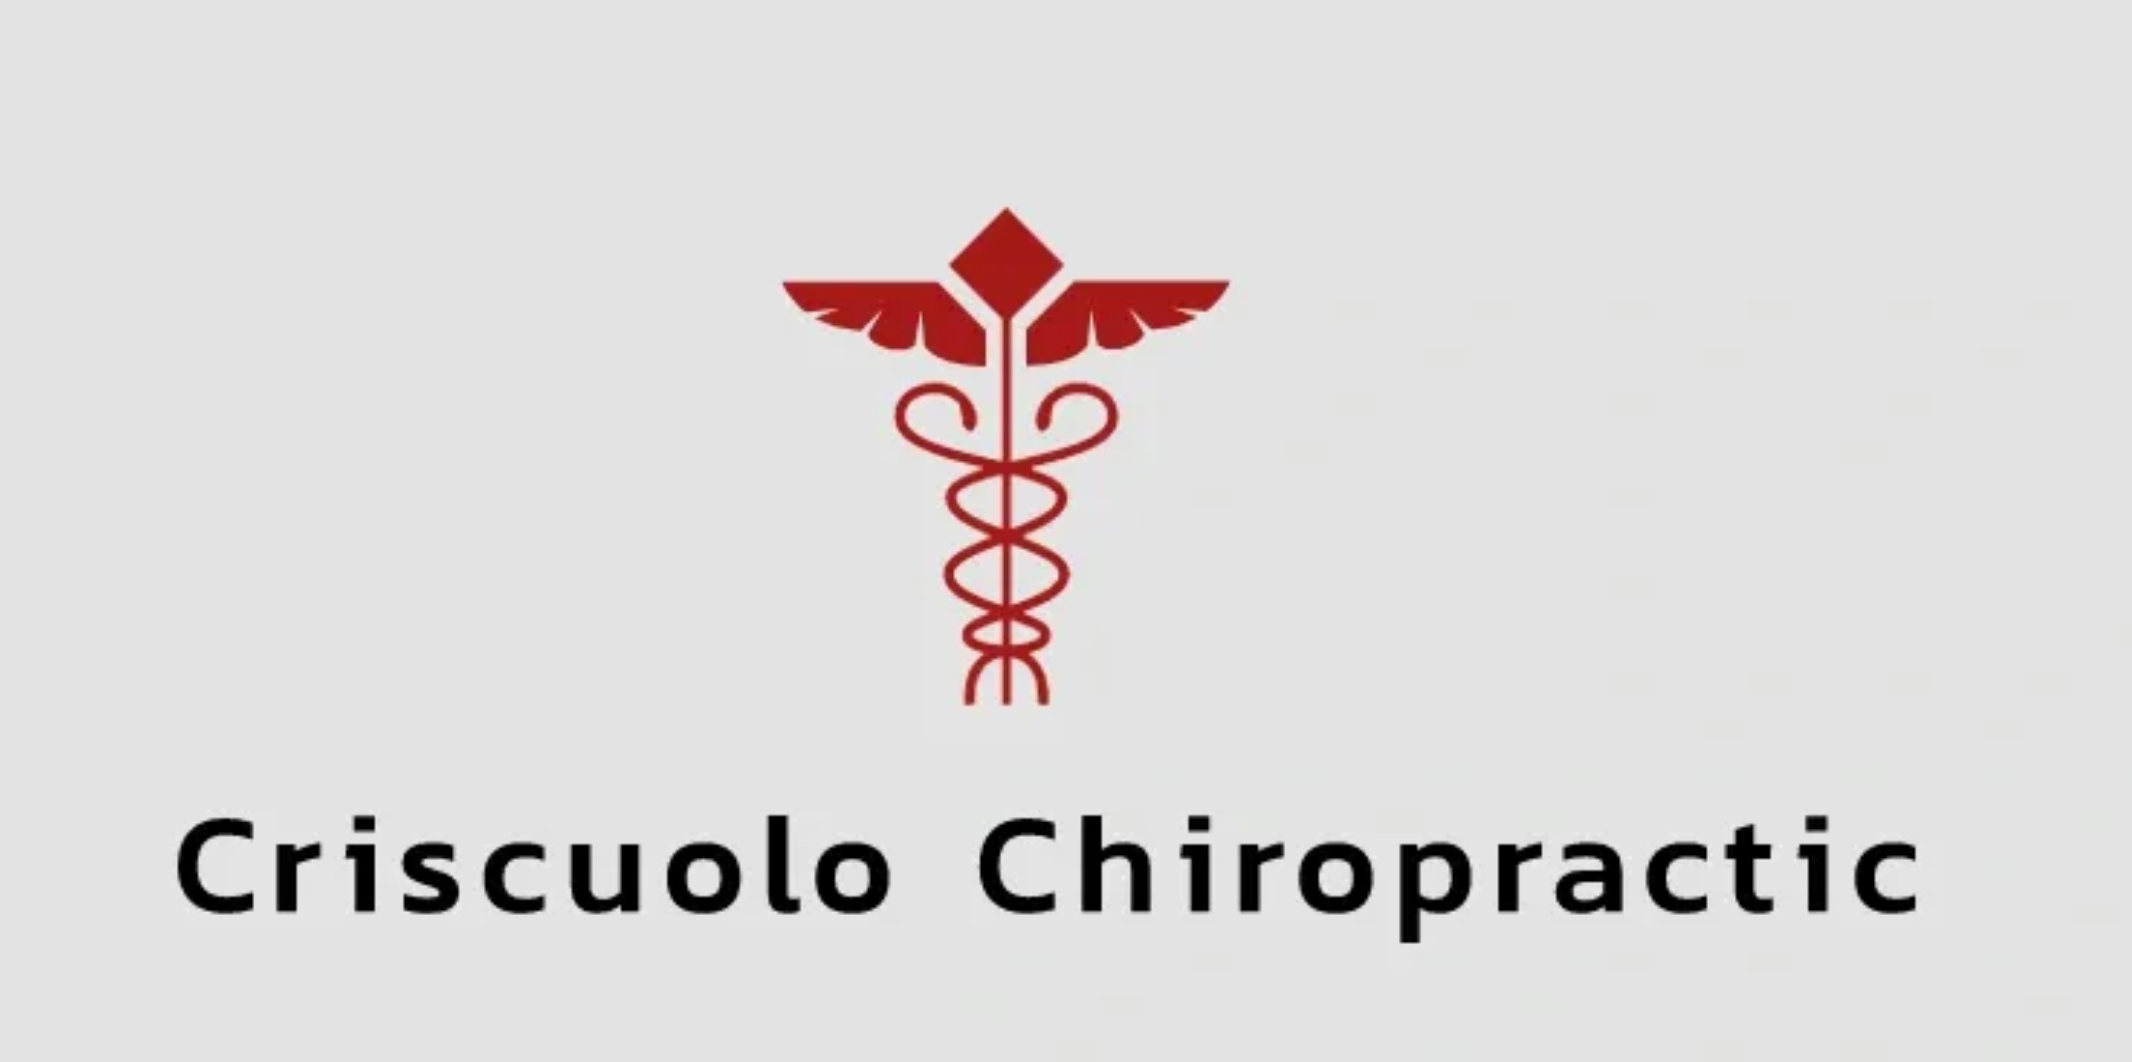 Criscuolo Chiropractic Health Center